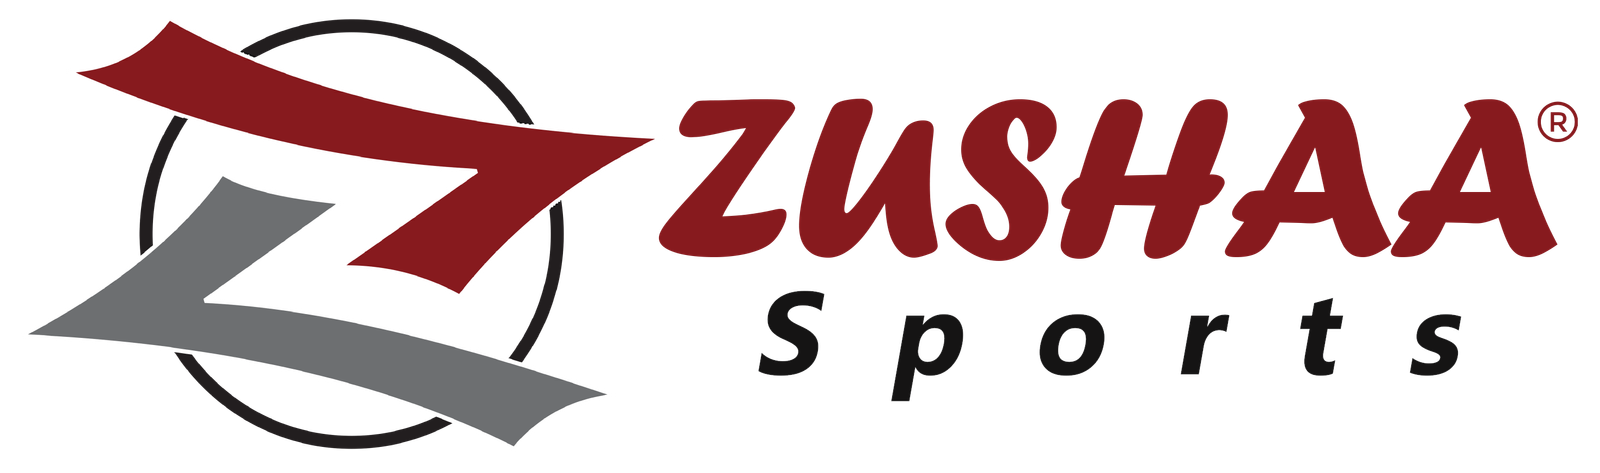 Zushaa-New-Logo